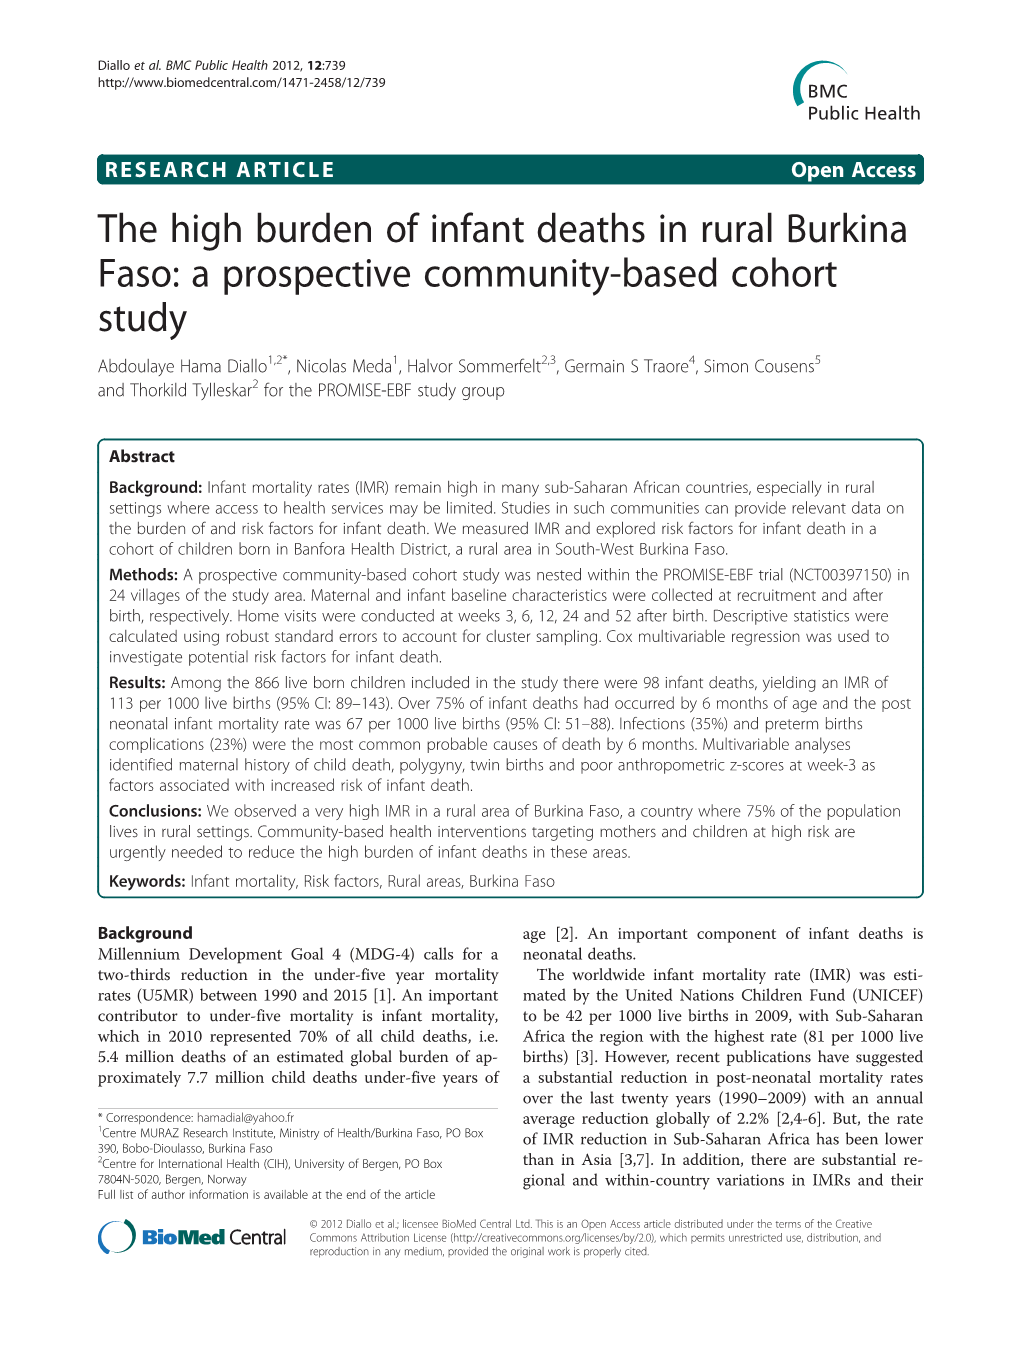 The High Burden of Infant Deaths in Rural Burkina Faso